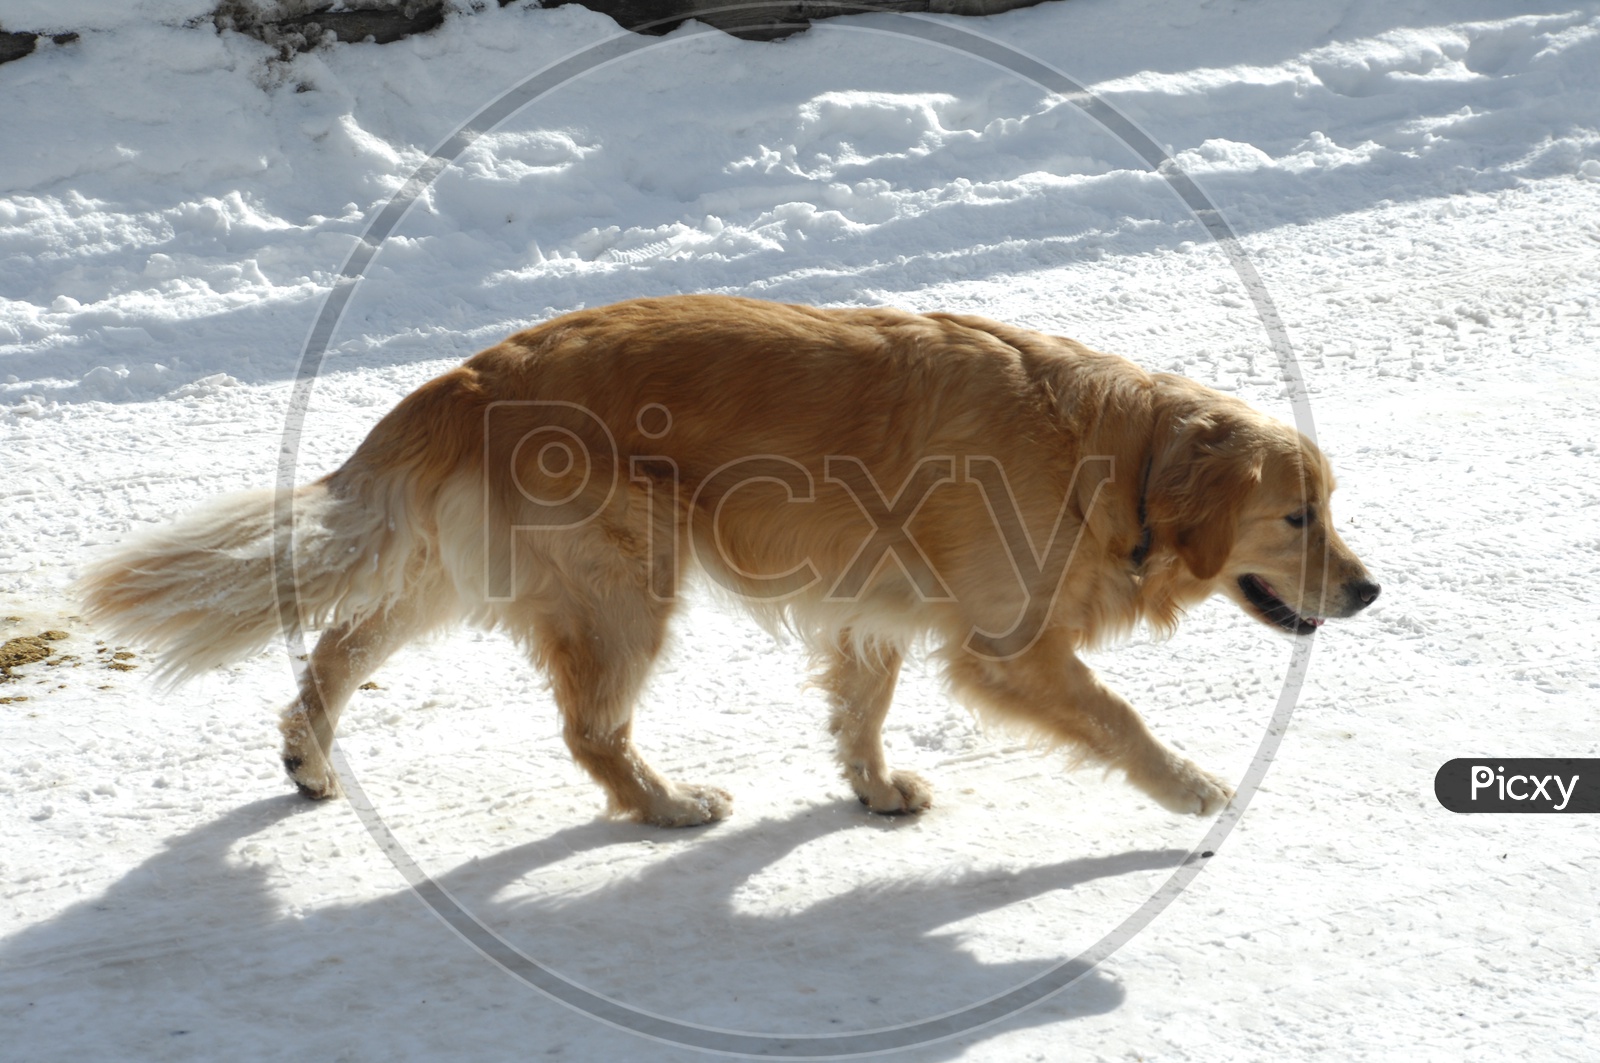 A Golden Retriever dog walking alongside the snow